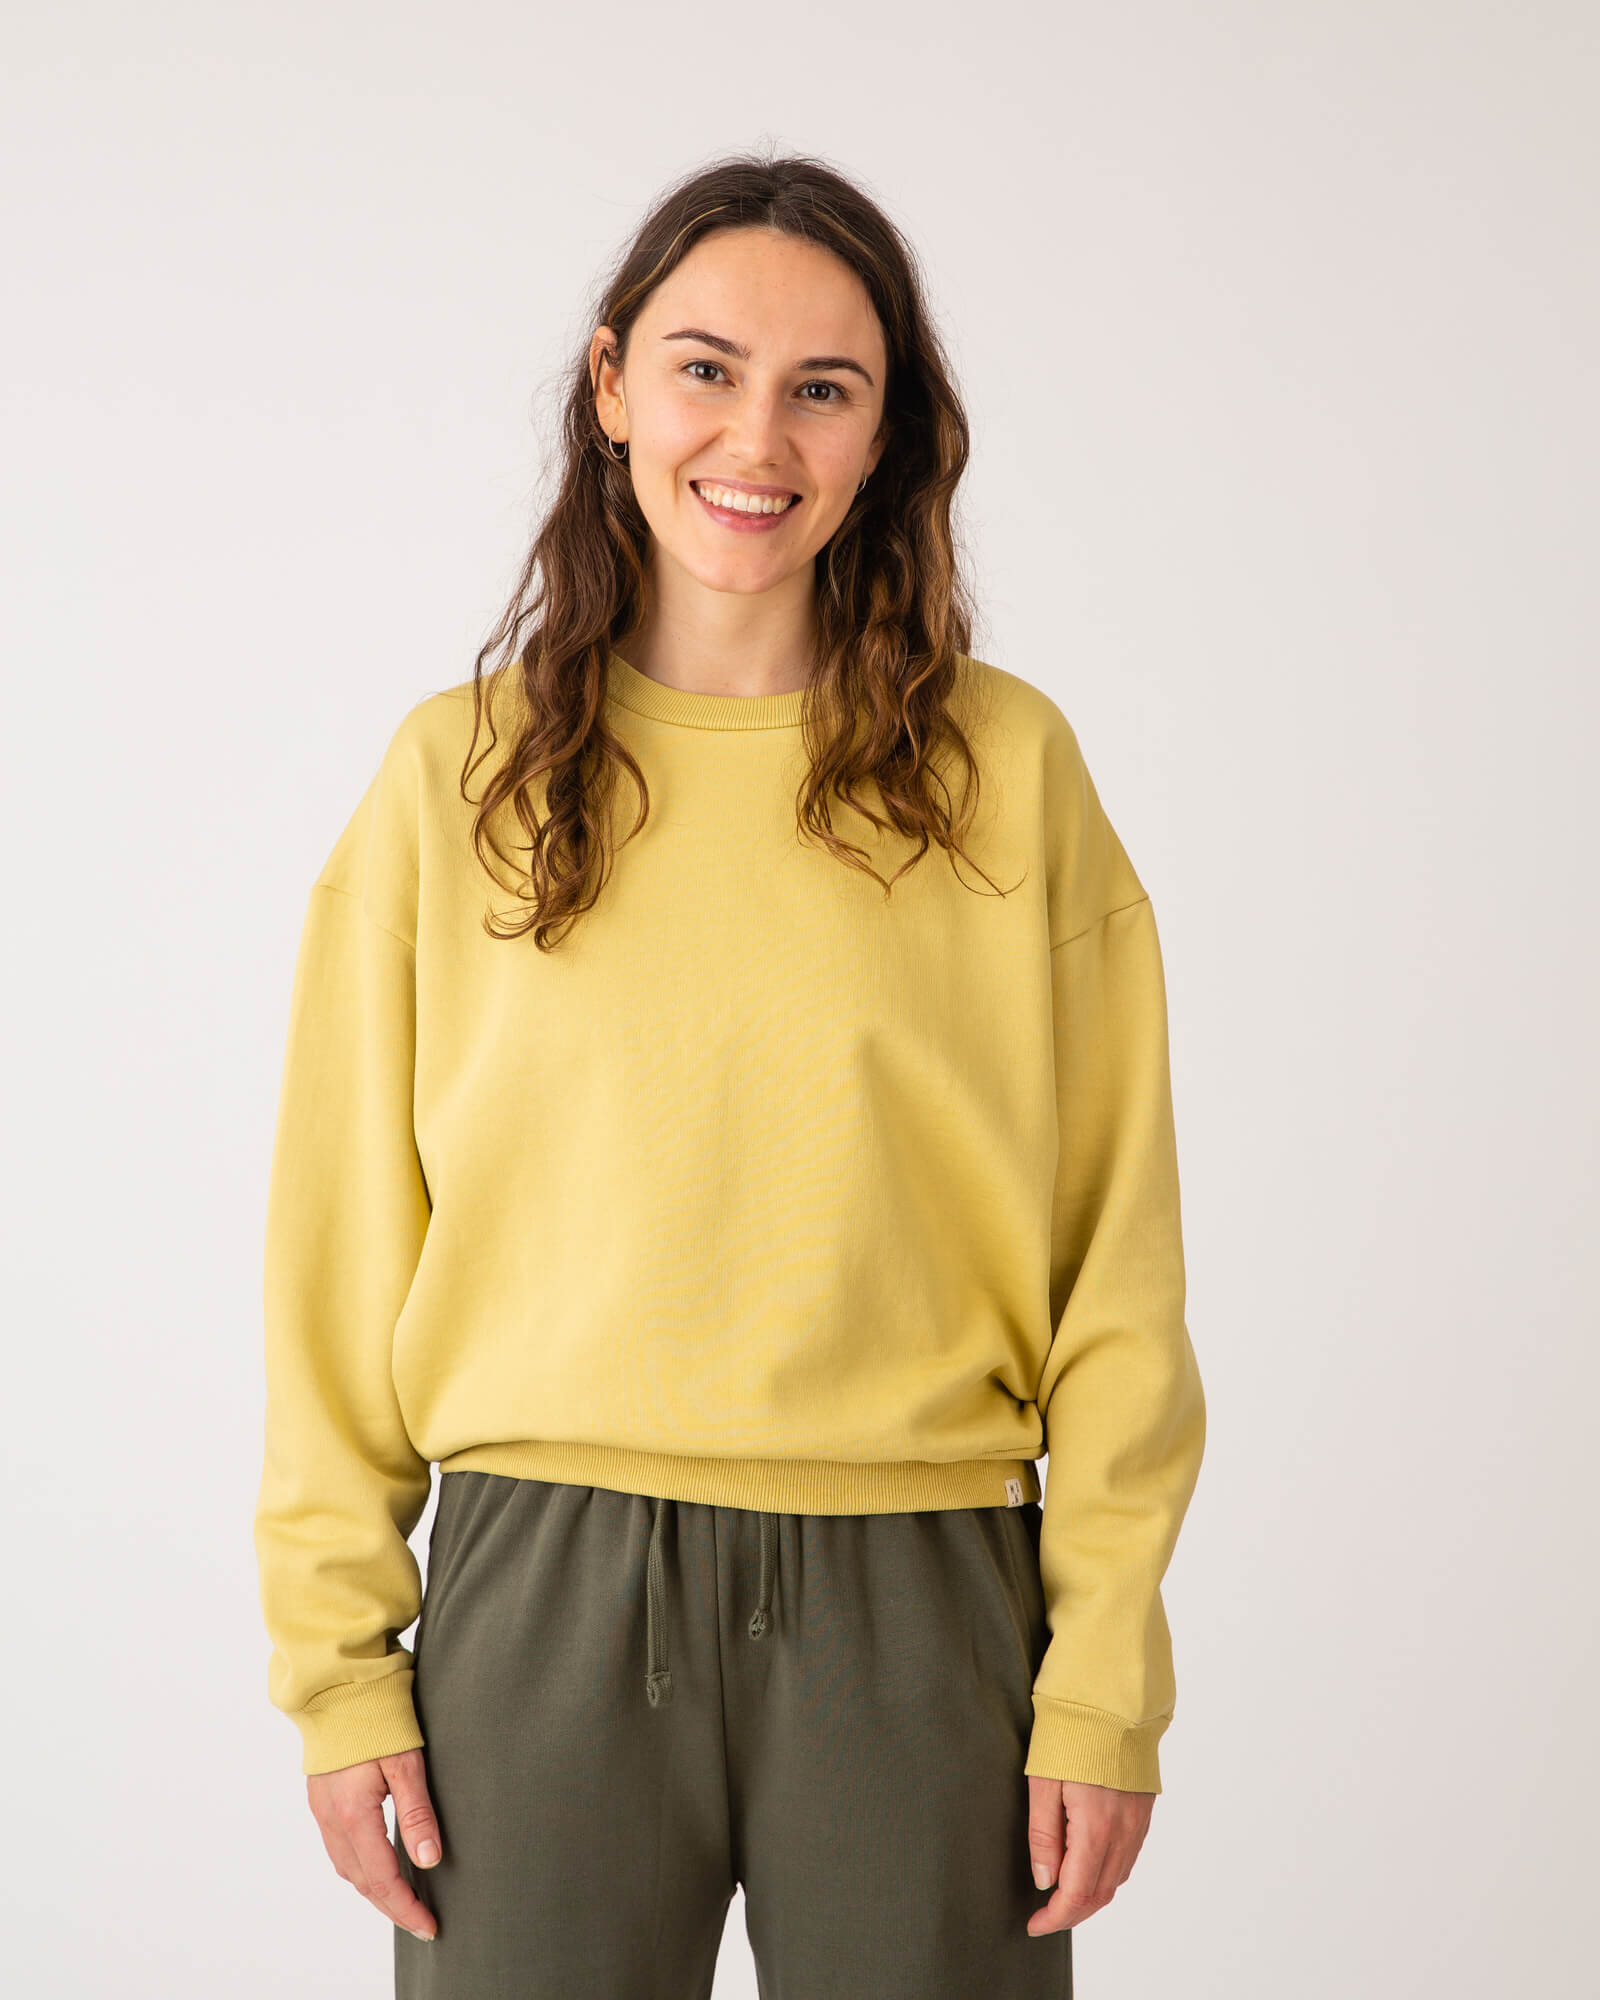 Yellow, long-sleeved sweatshirt citrona made of organic cotton by Matona